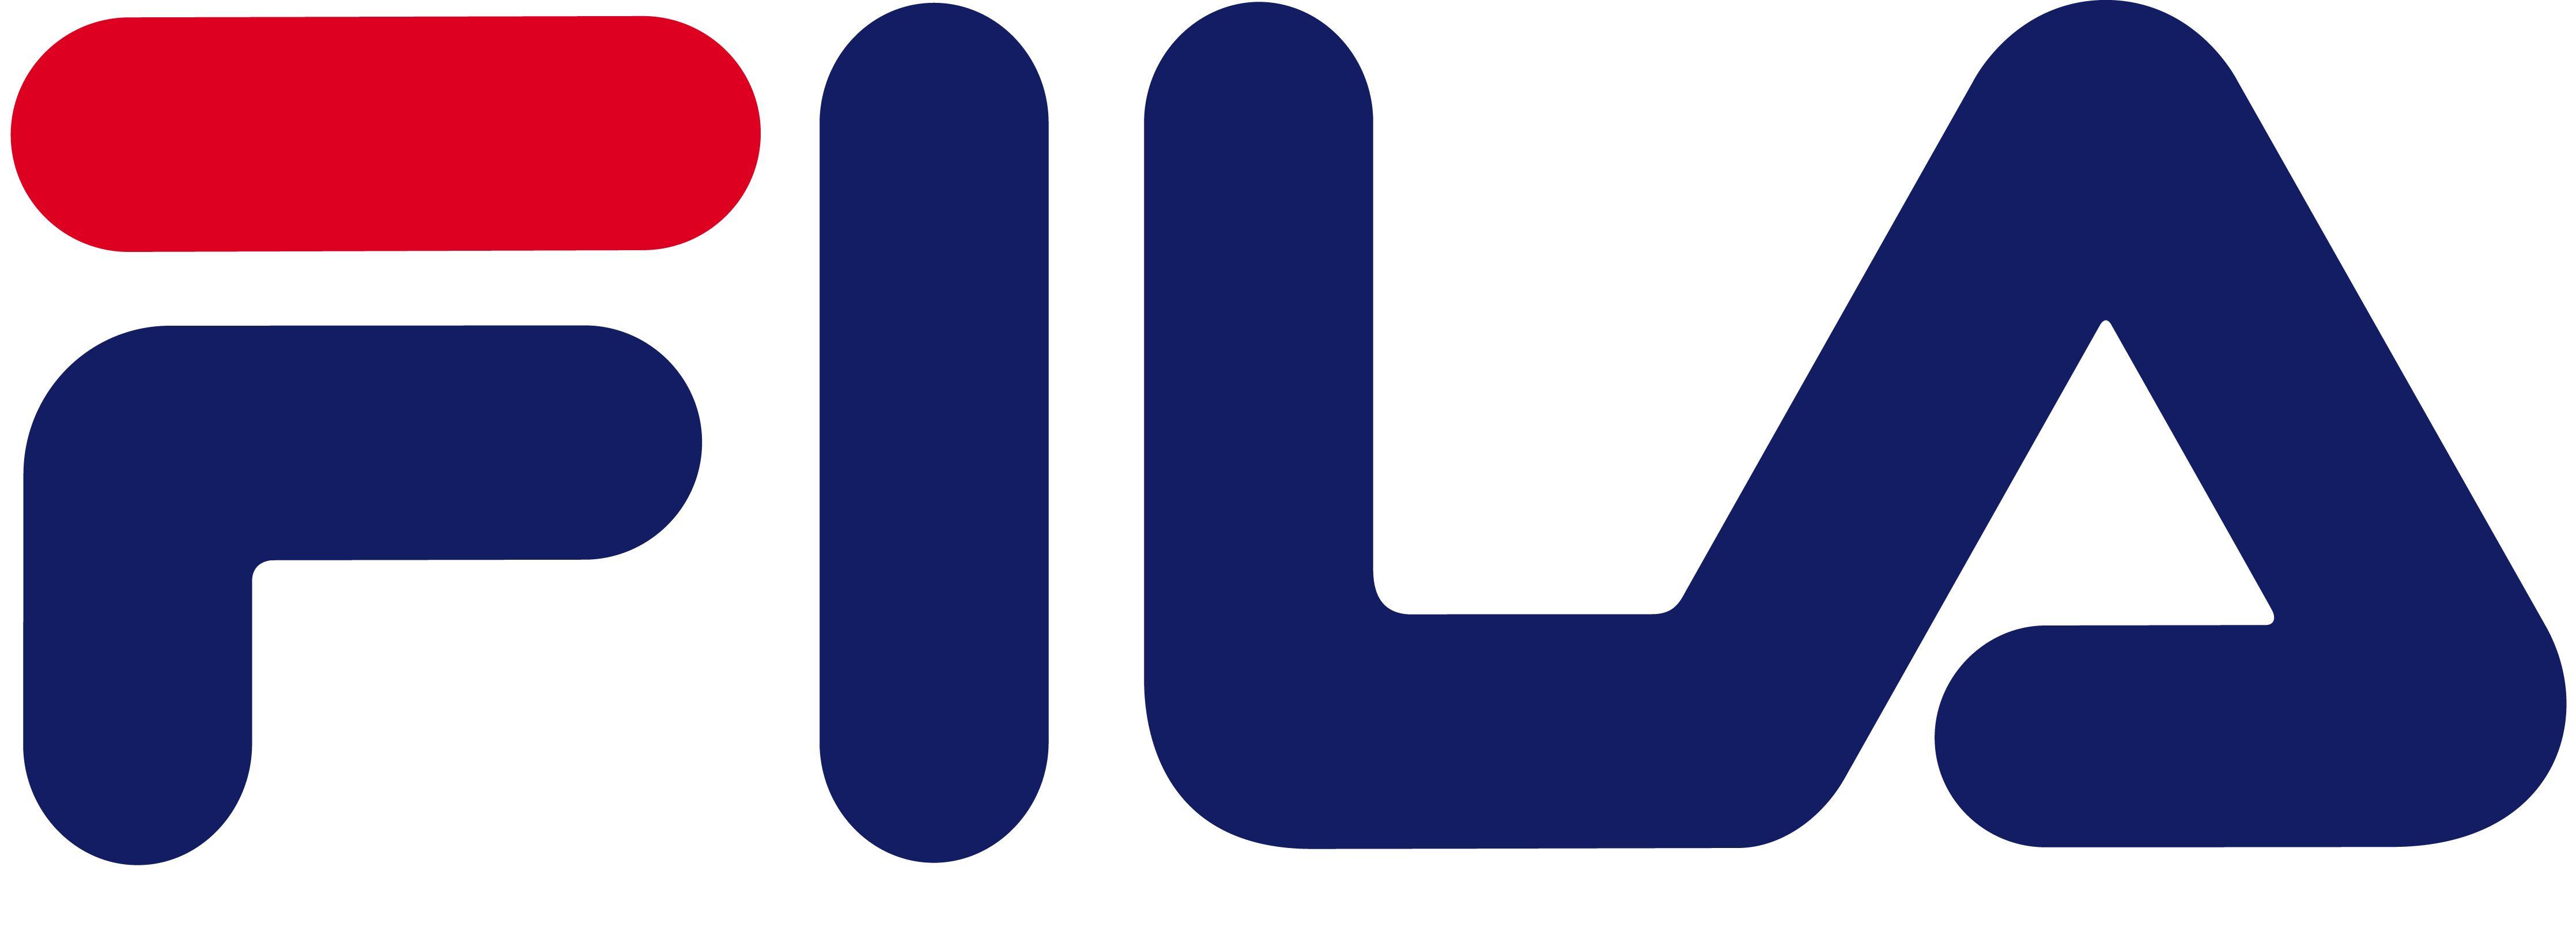 Fila Logo Wallpapers Top Free Fila Logo Backgrounds Wallpaperaccess